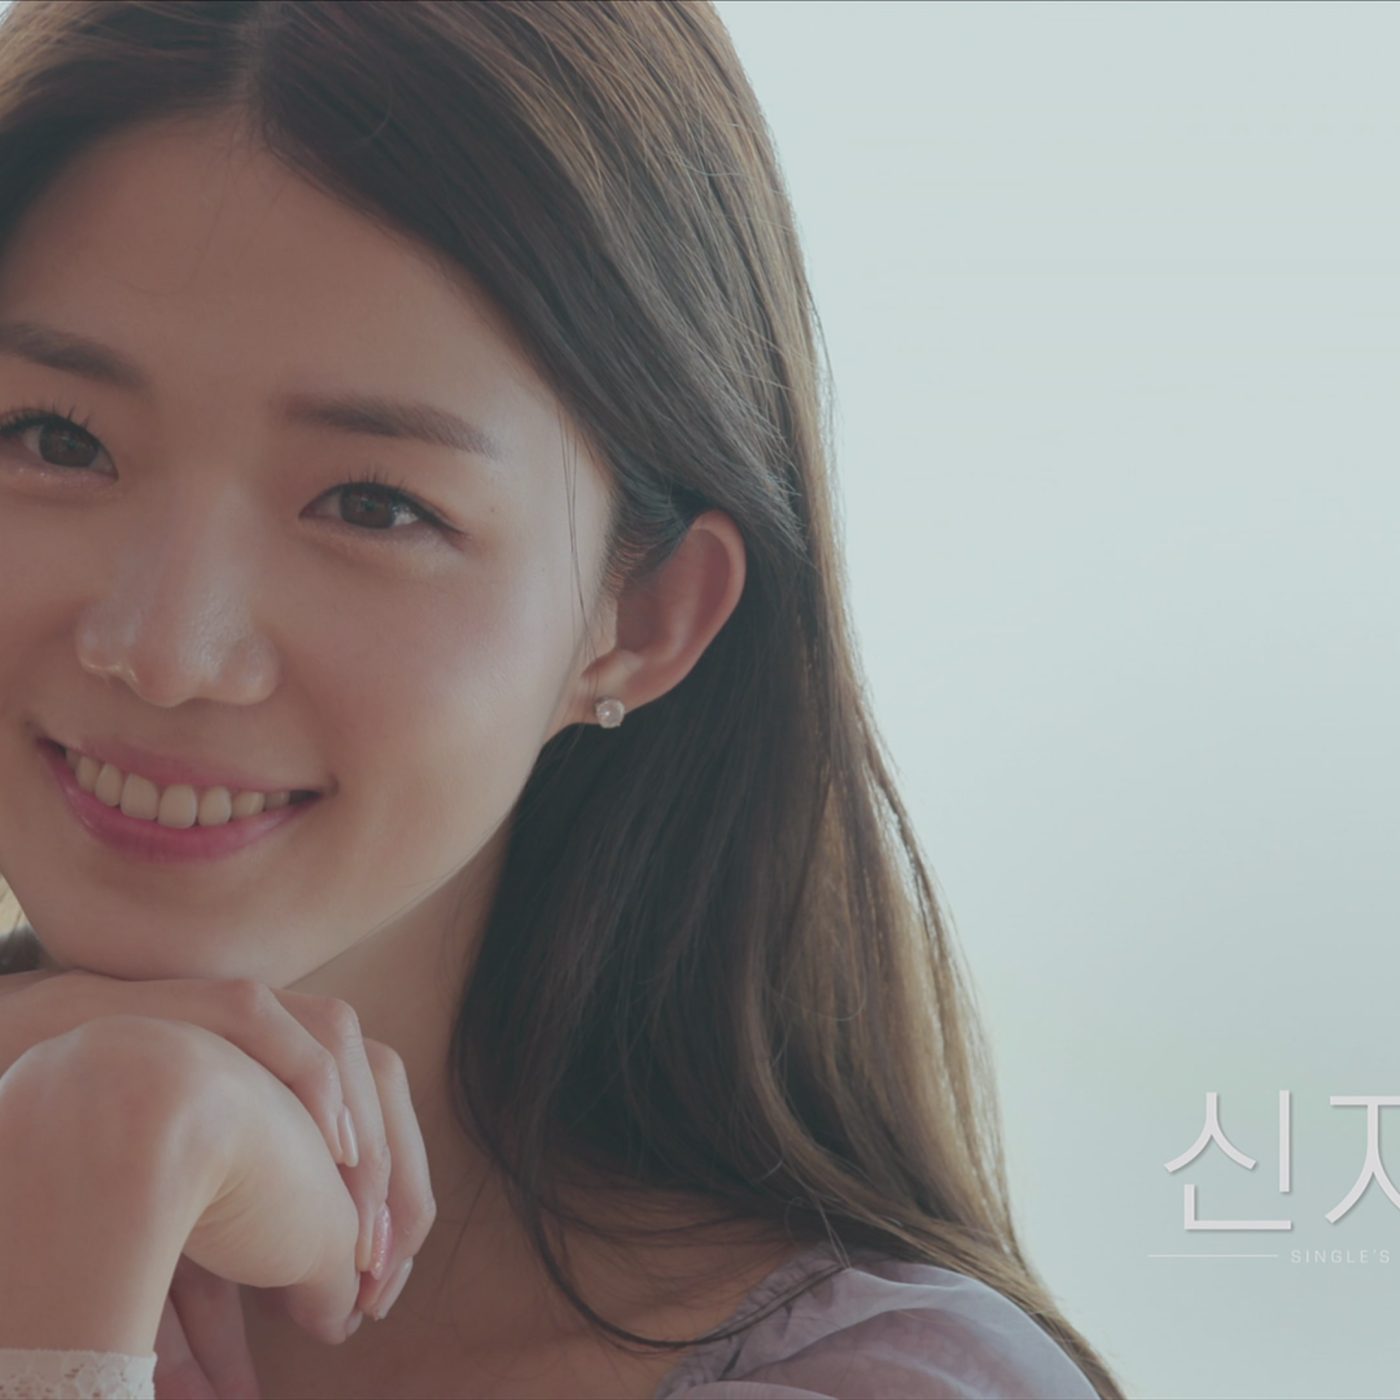 Single's Infierno, el reality show coreano que intriga en Netflix